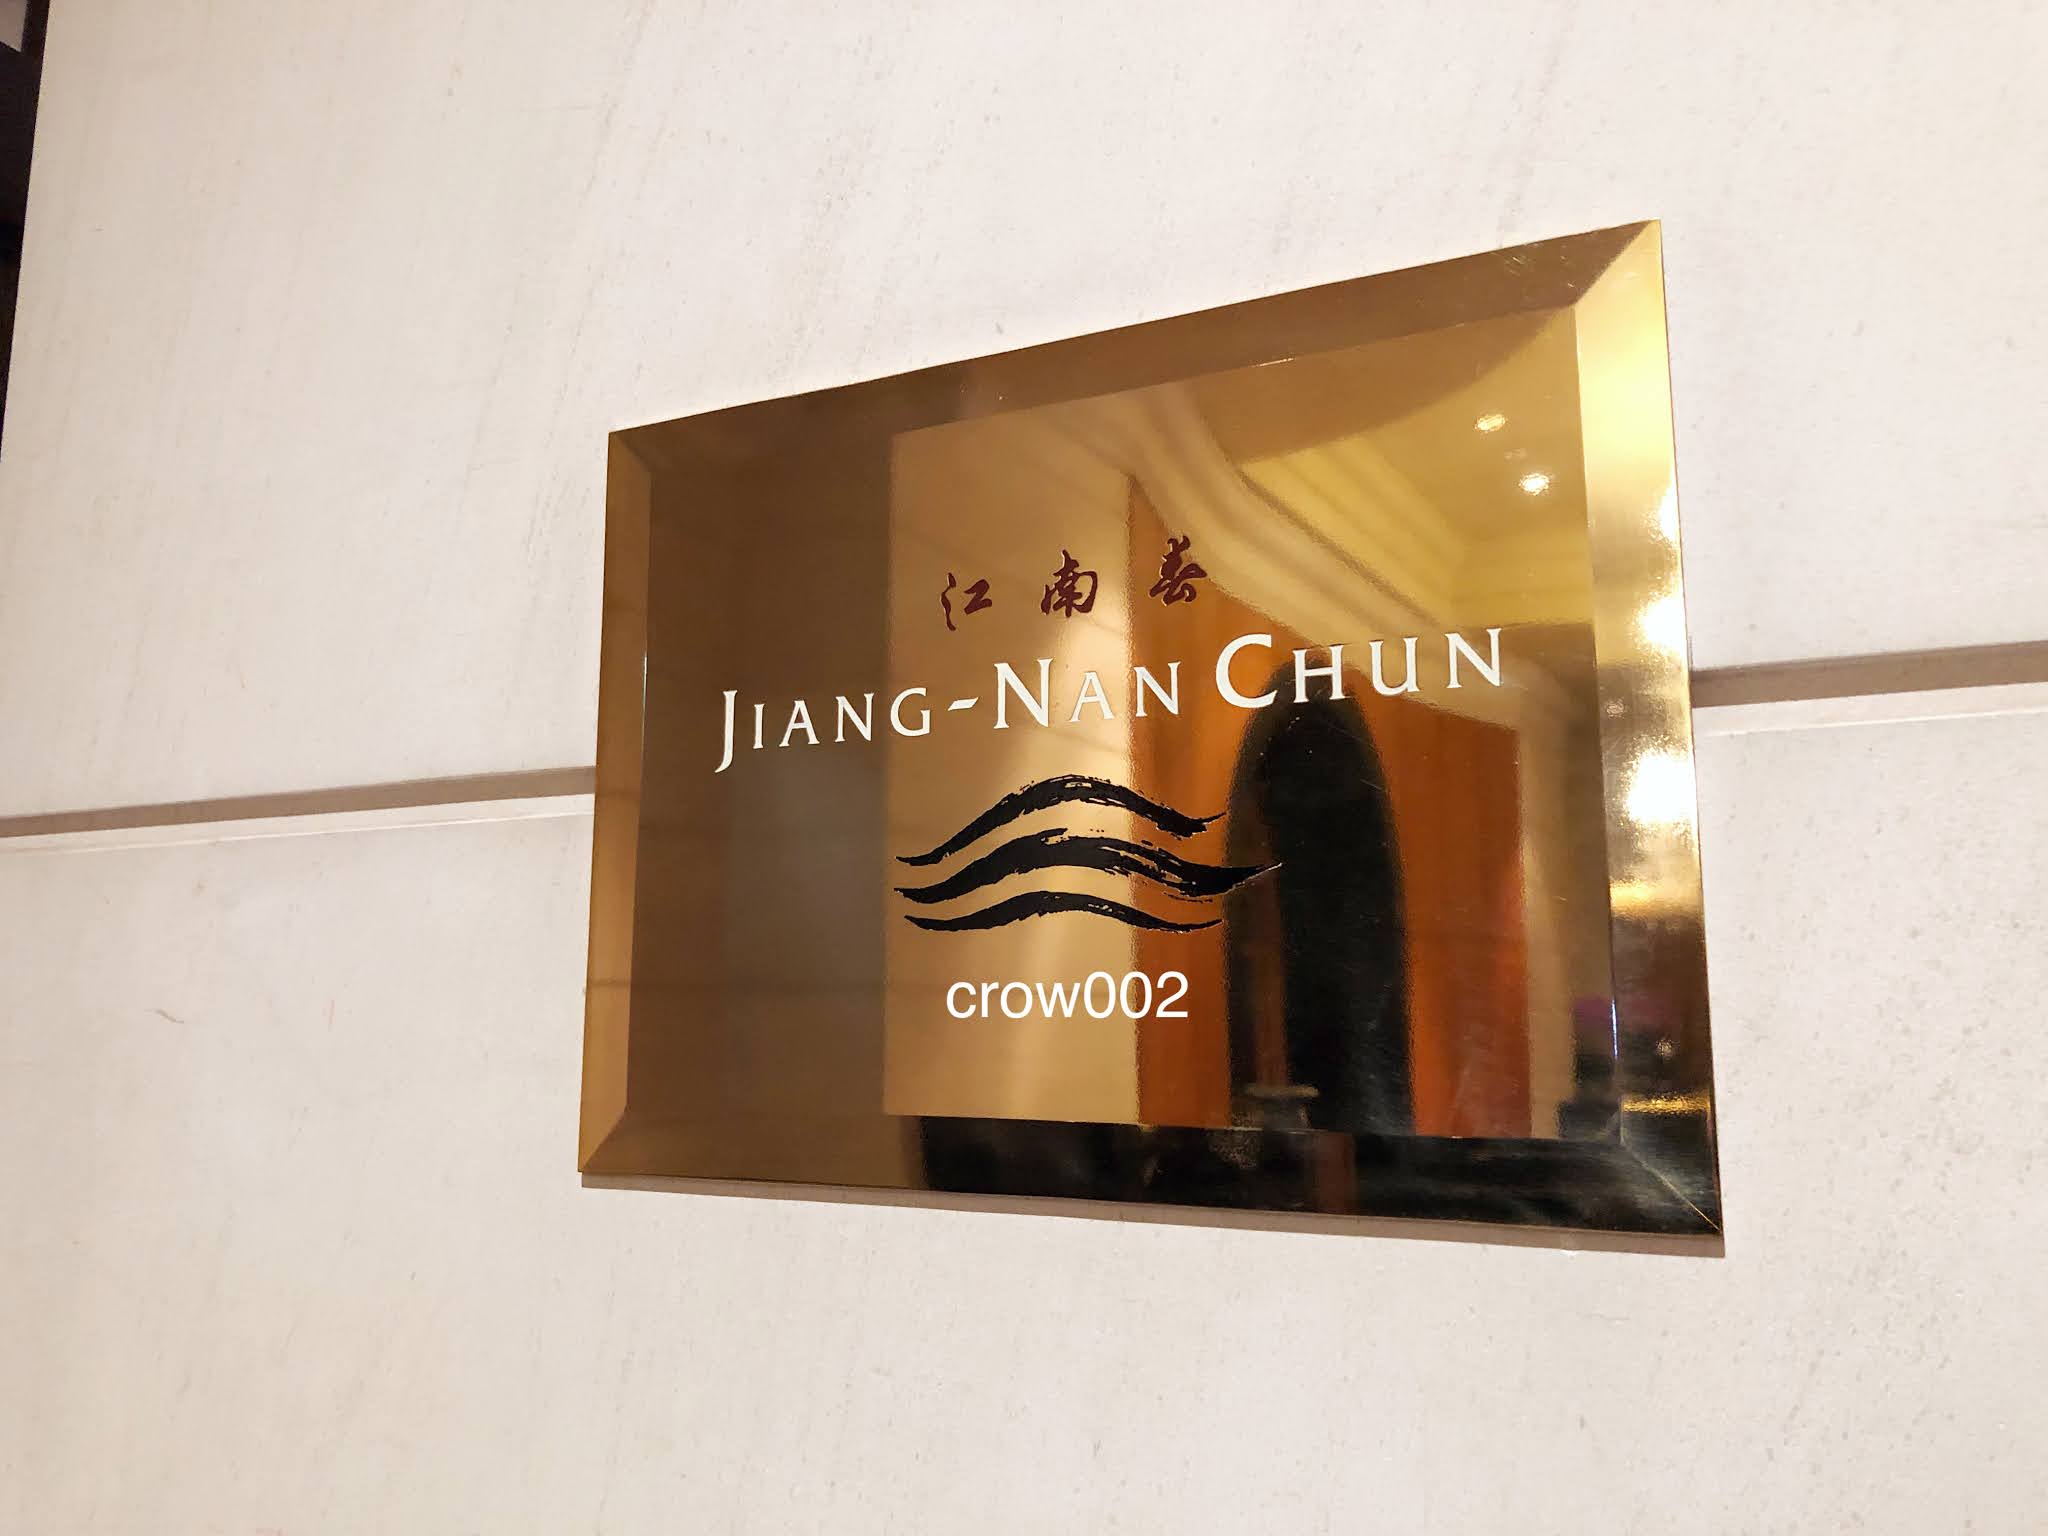 JIANG NAN CHUN at FOUR SEASONS HOTEL SINGAPORE - 포시즌스 호텔 싱가포르 지앙난춘 런치 딤섬 2020년 1월